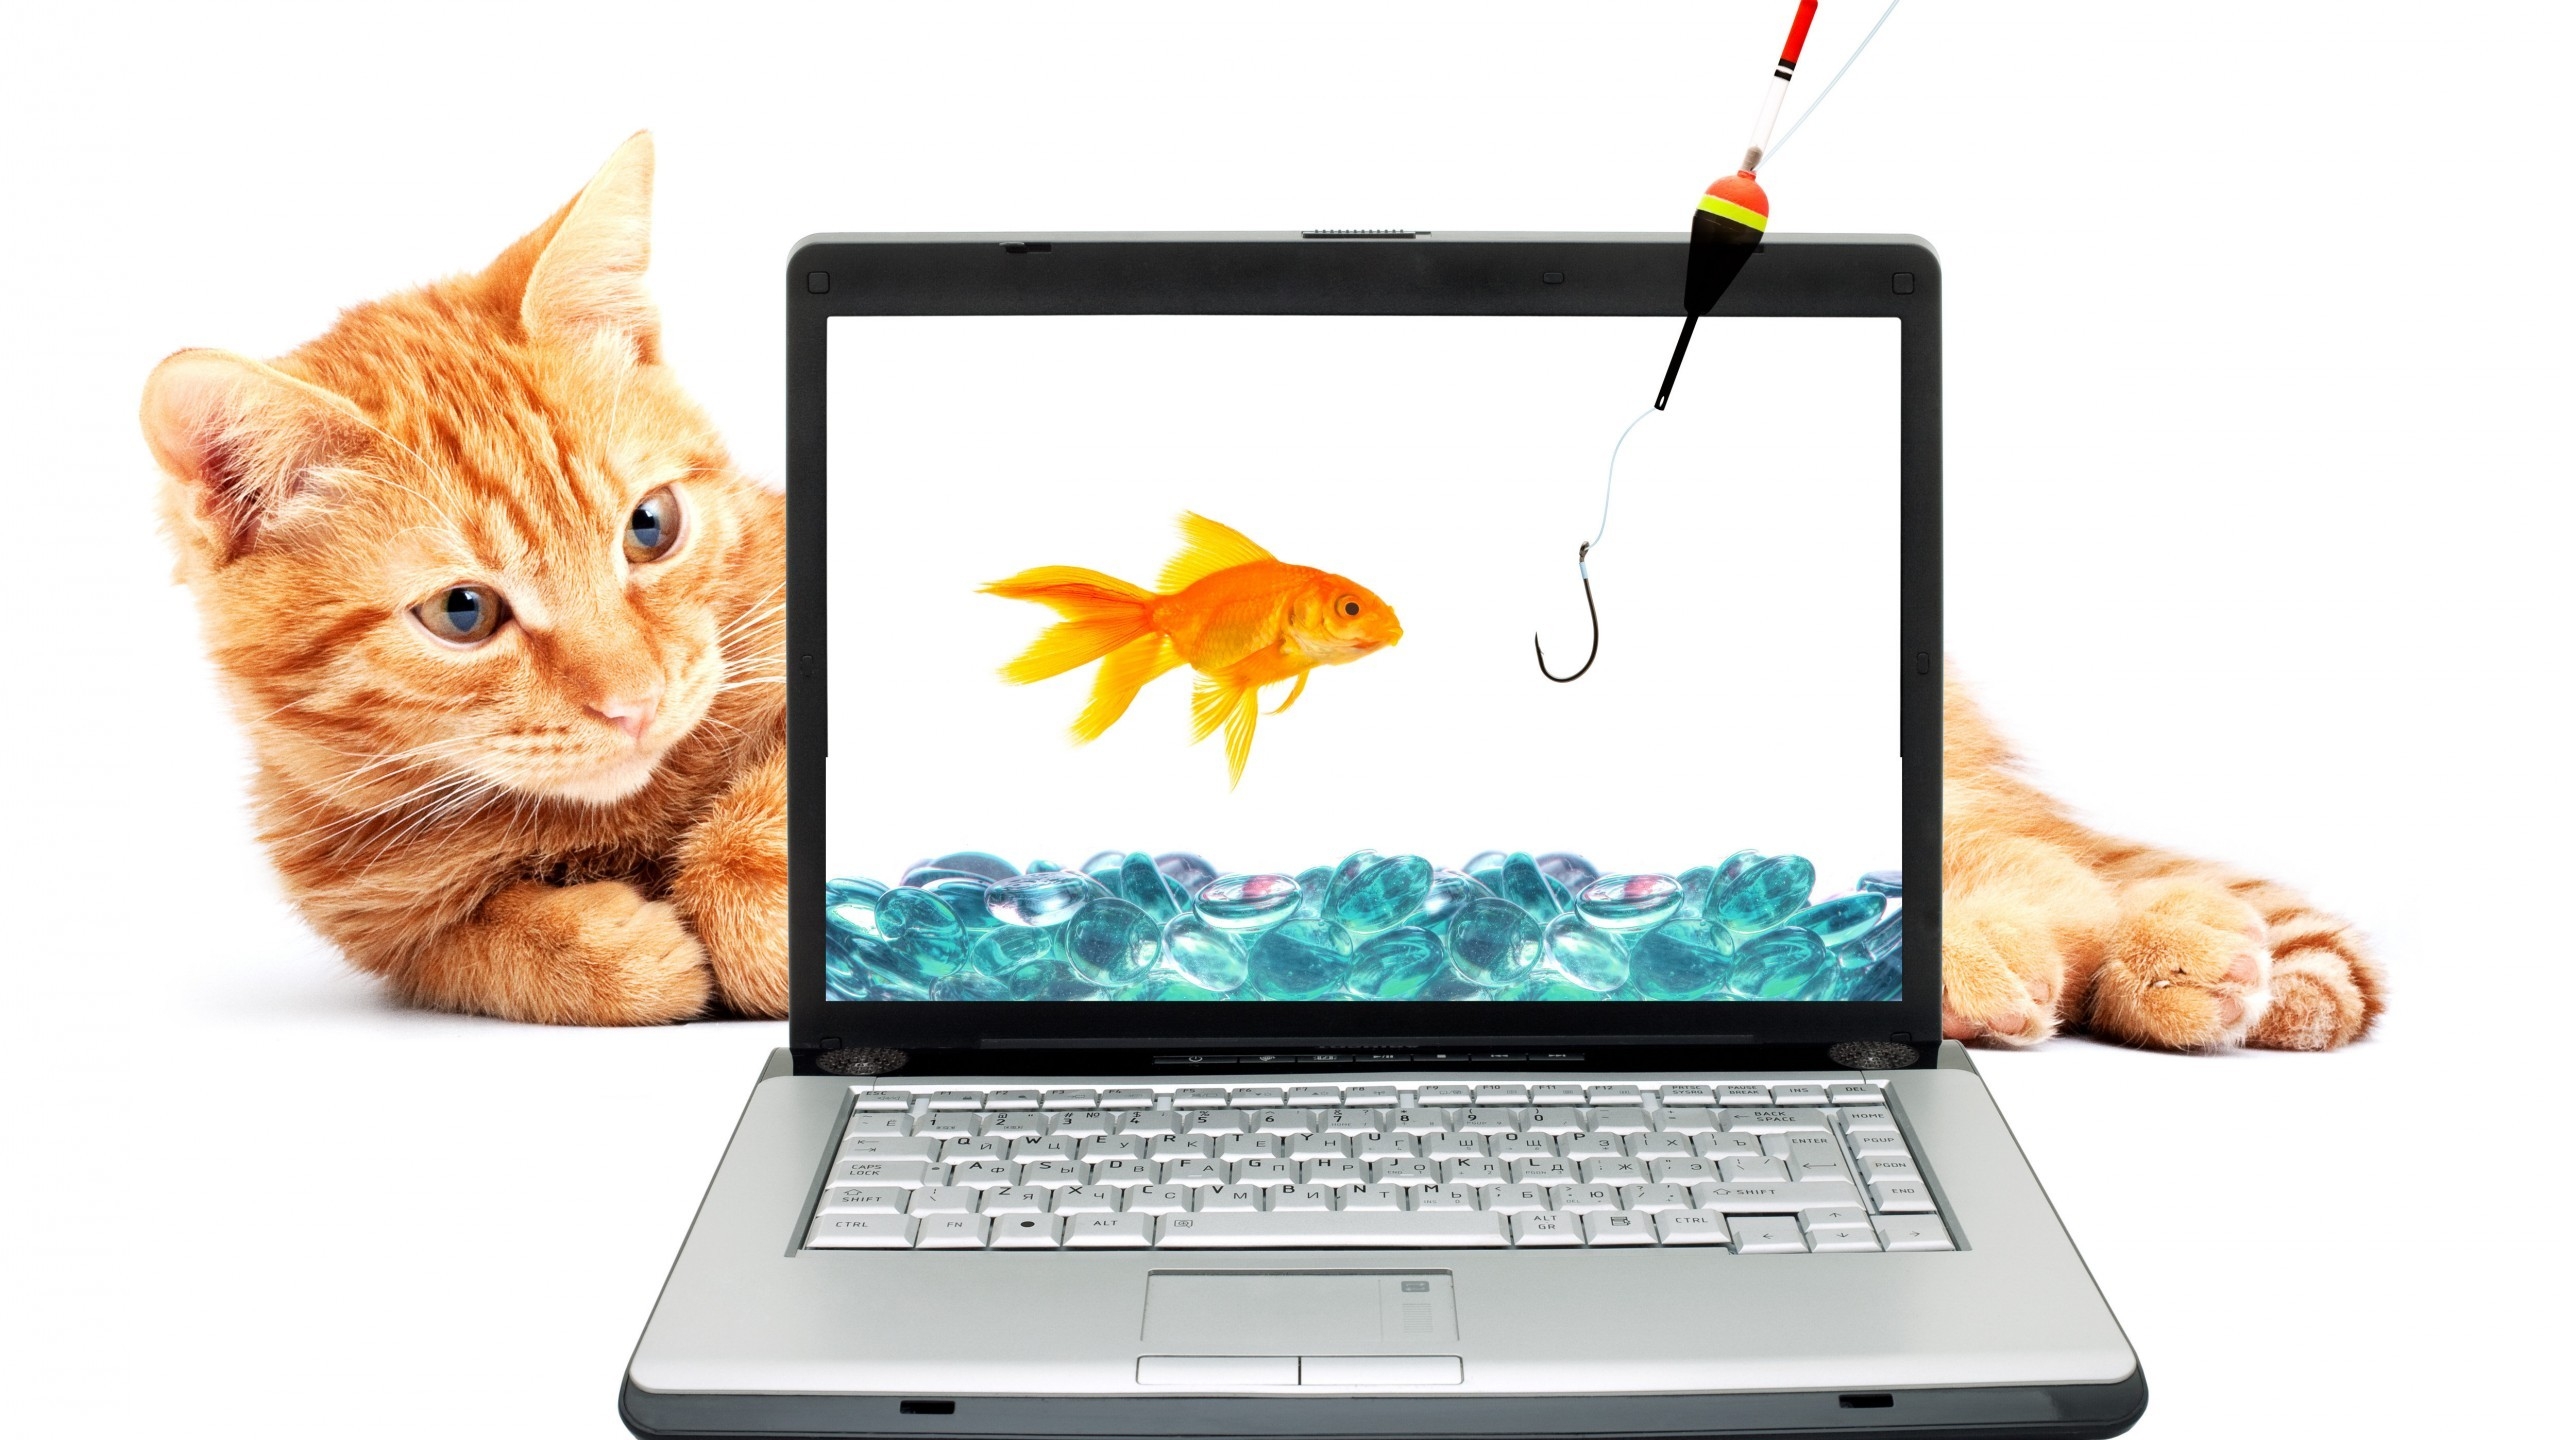 Fishing Cat for 2560x1440 HDTV resolution